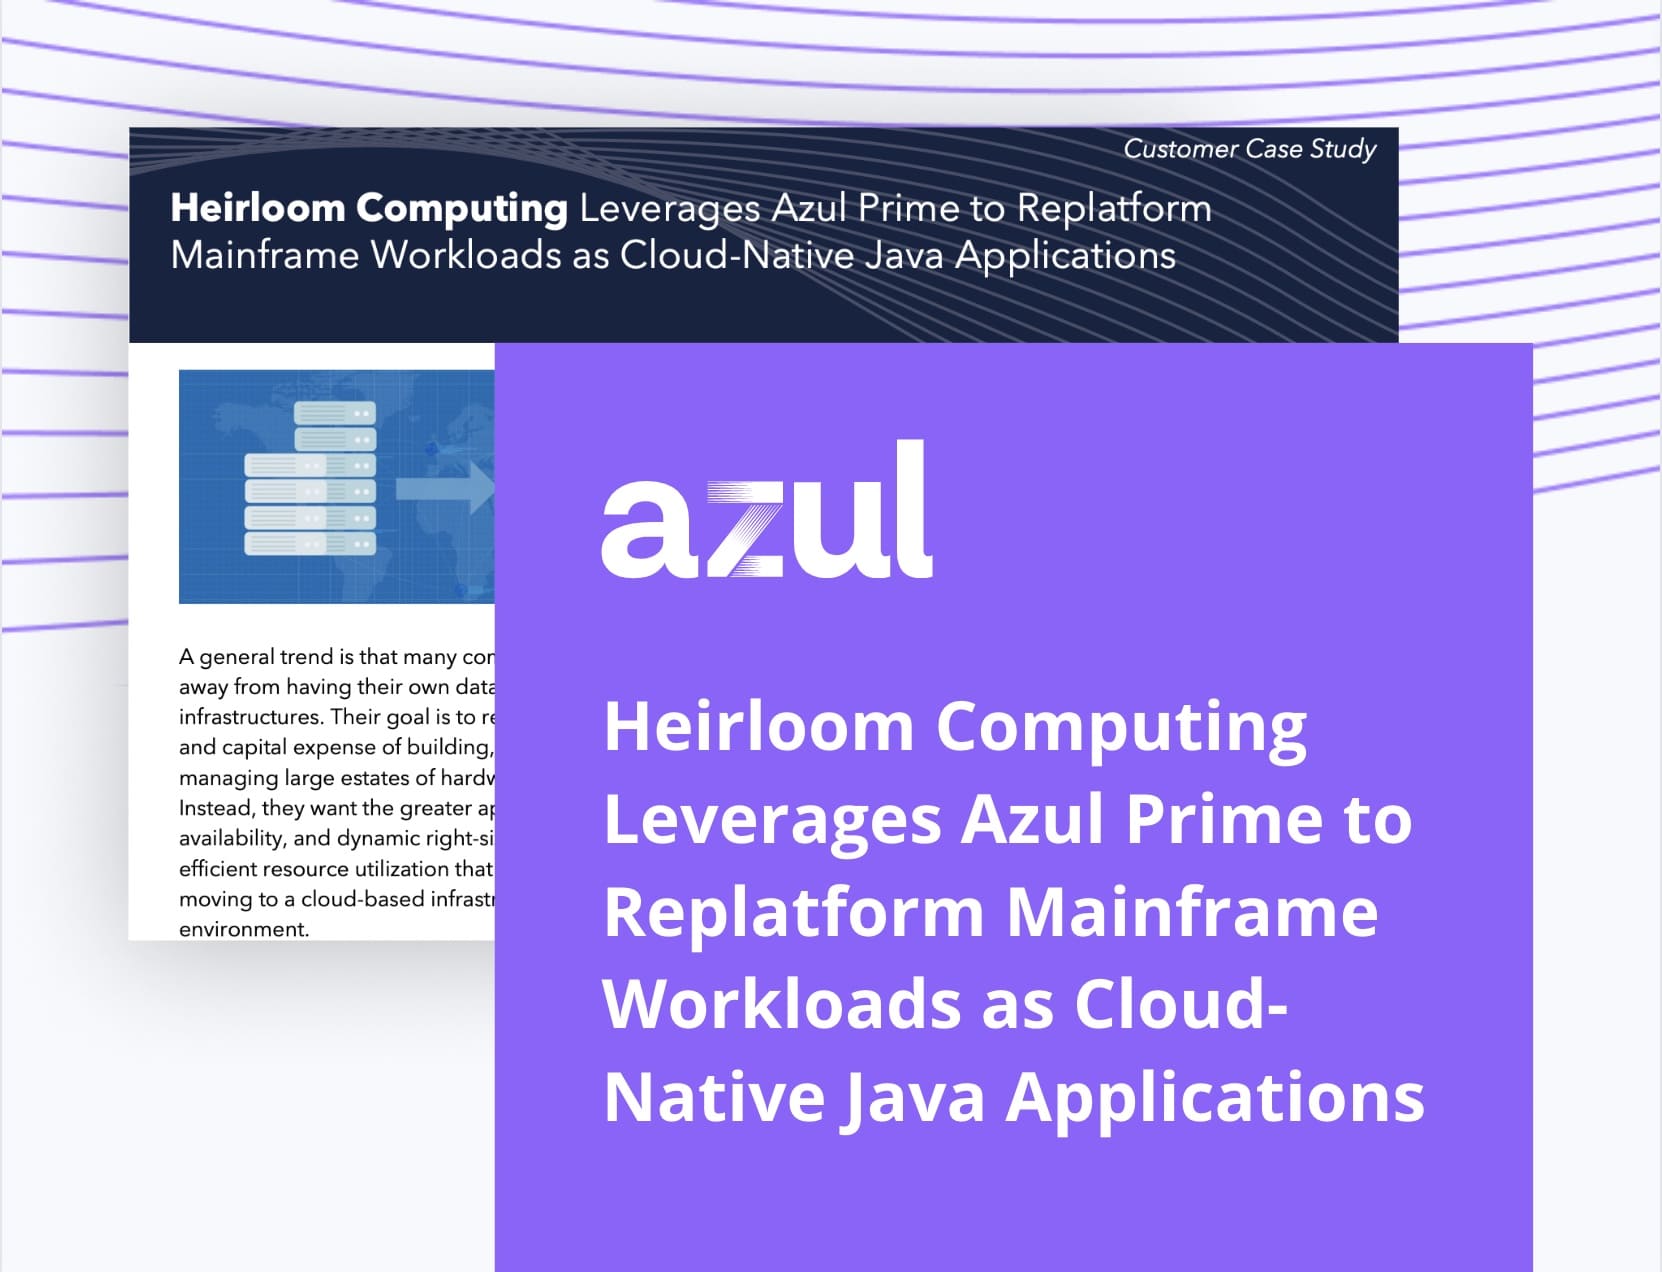 Heirloom Computing Leverages Azul Prime to Replatform Mainframe Workloads as Cloud-Native Java Applications